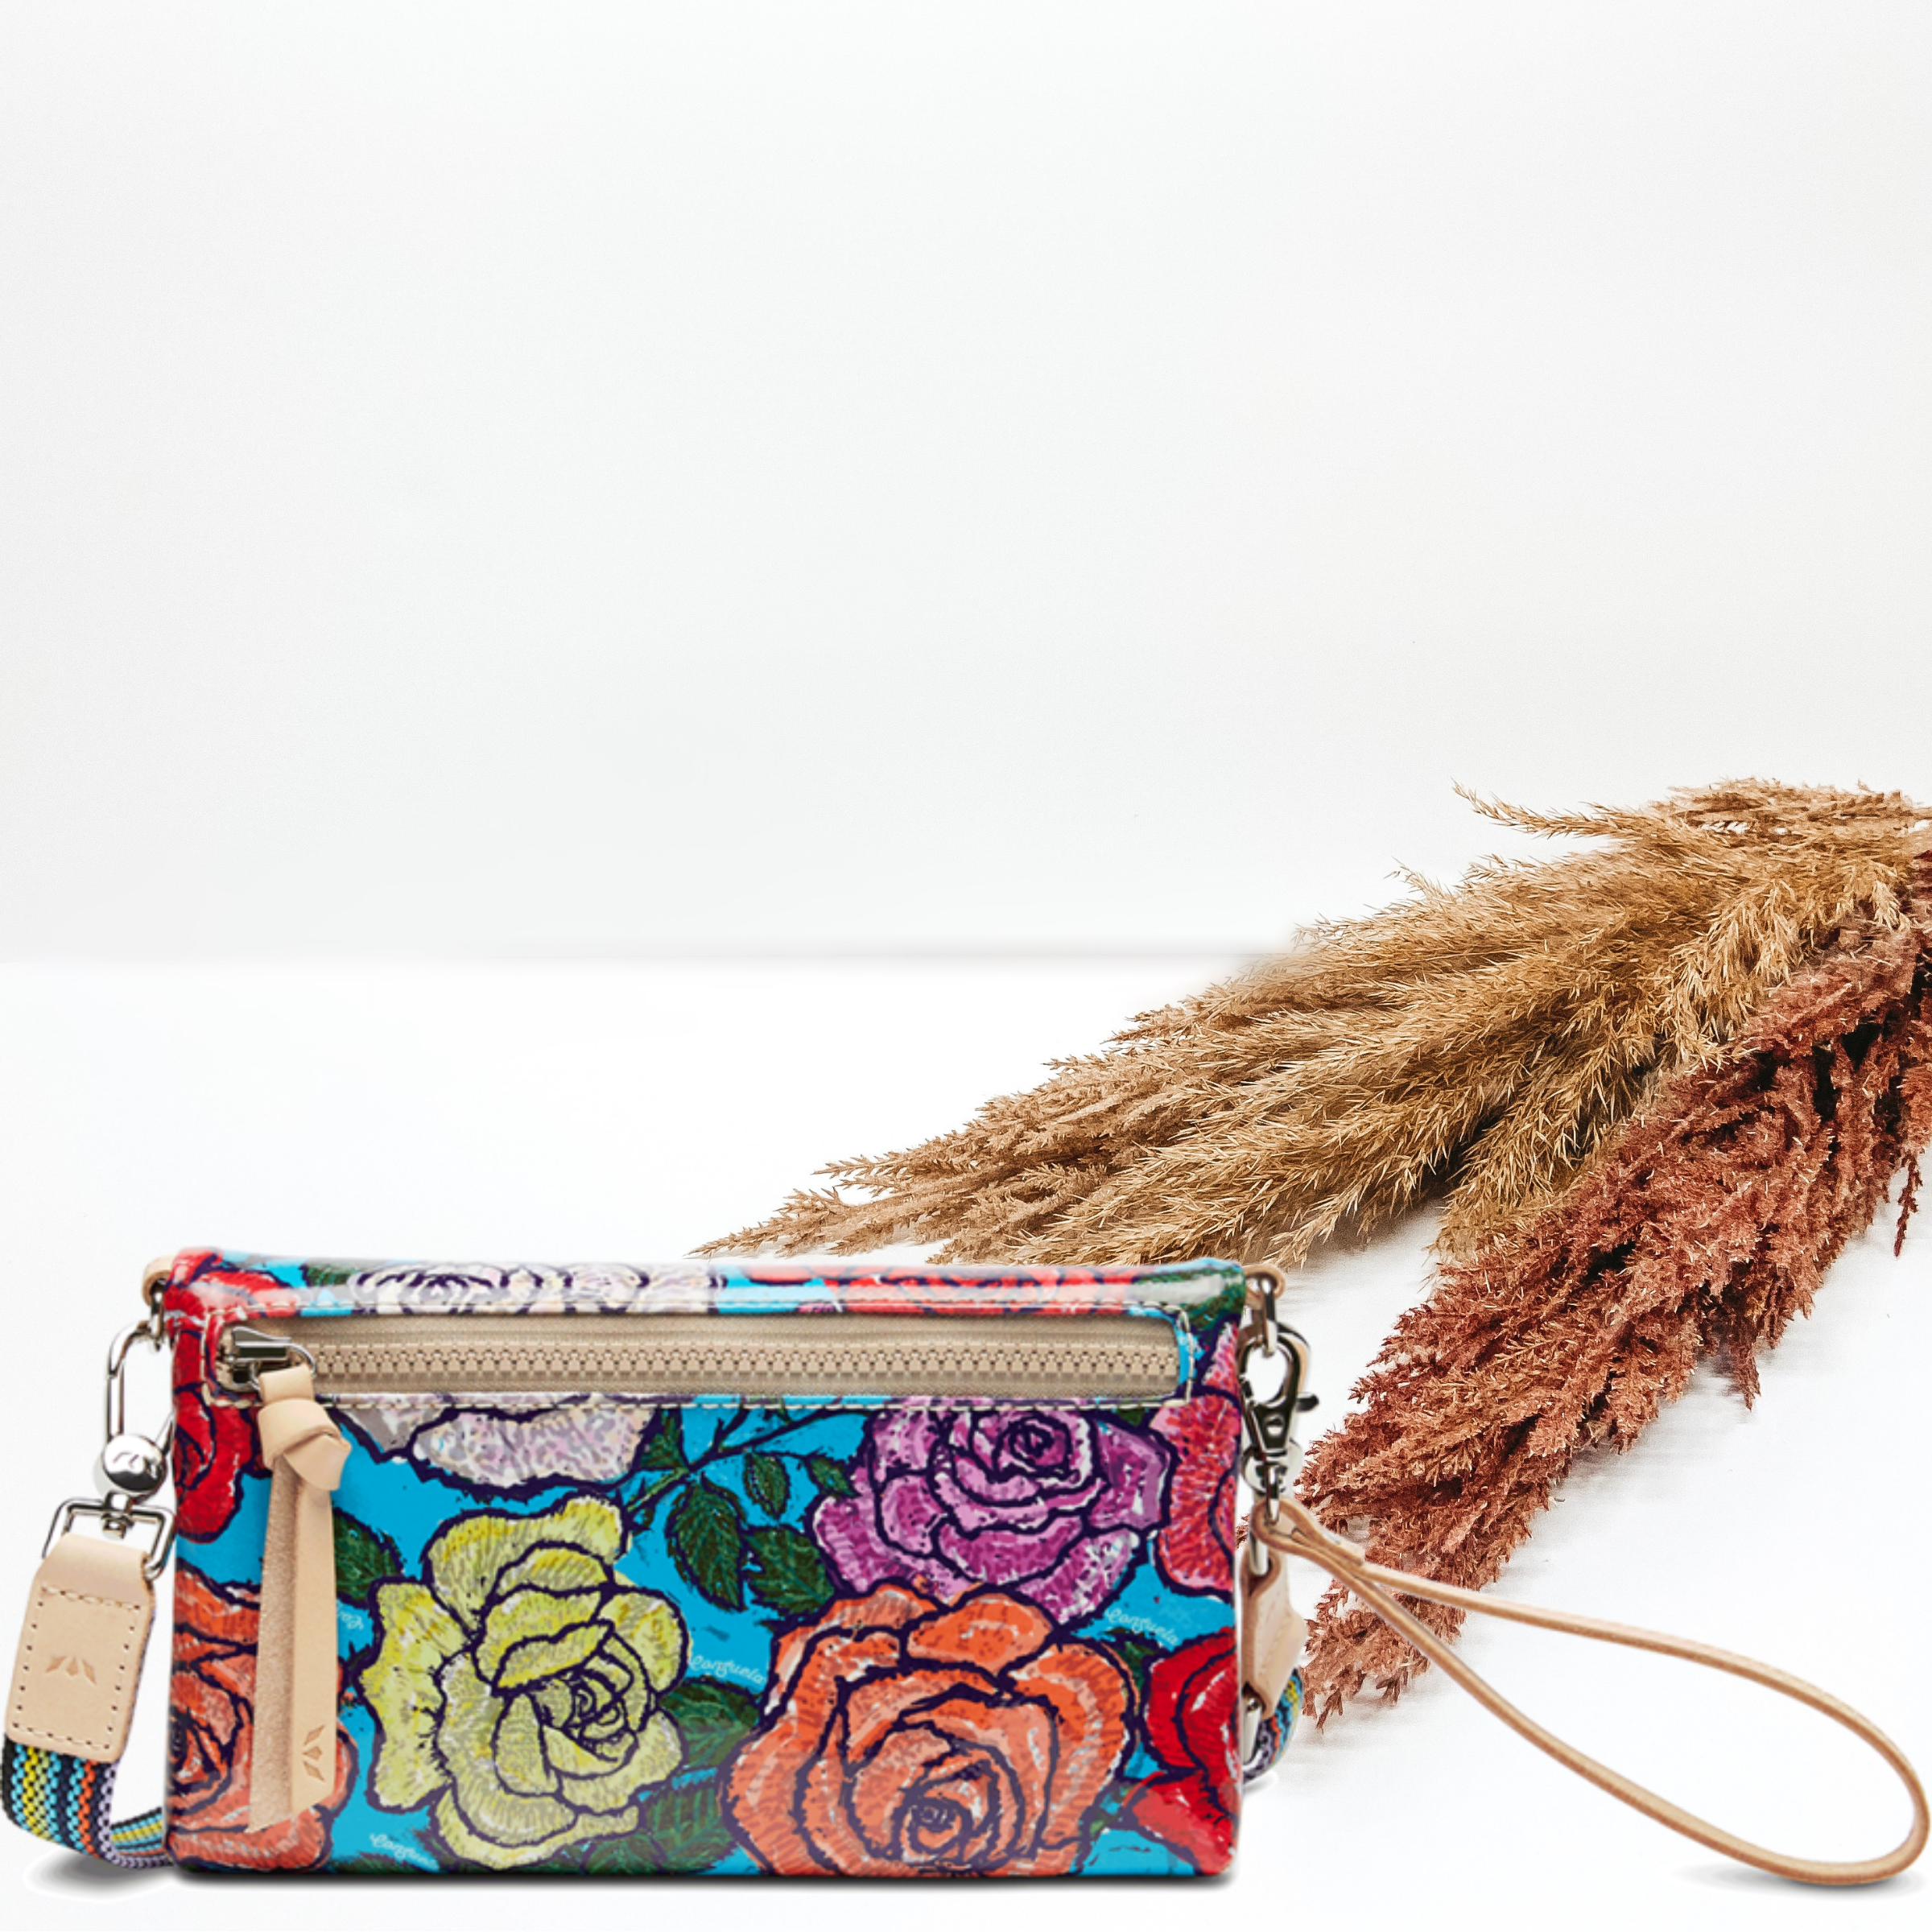 Consuela | Rosita Uptown Crossbody Bag - Giddy Up Glamour Boutique